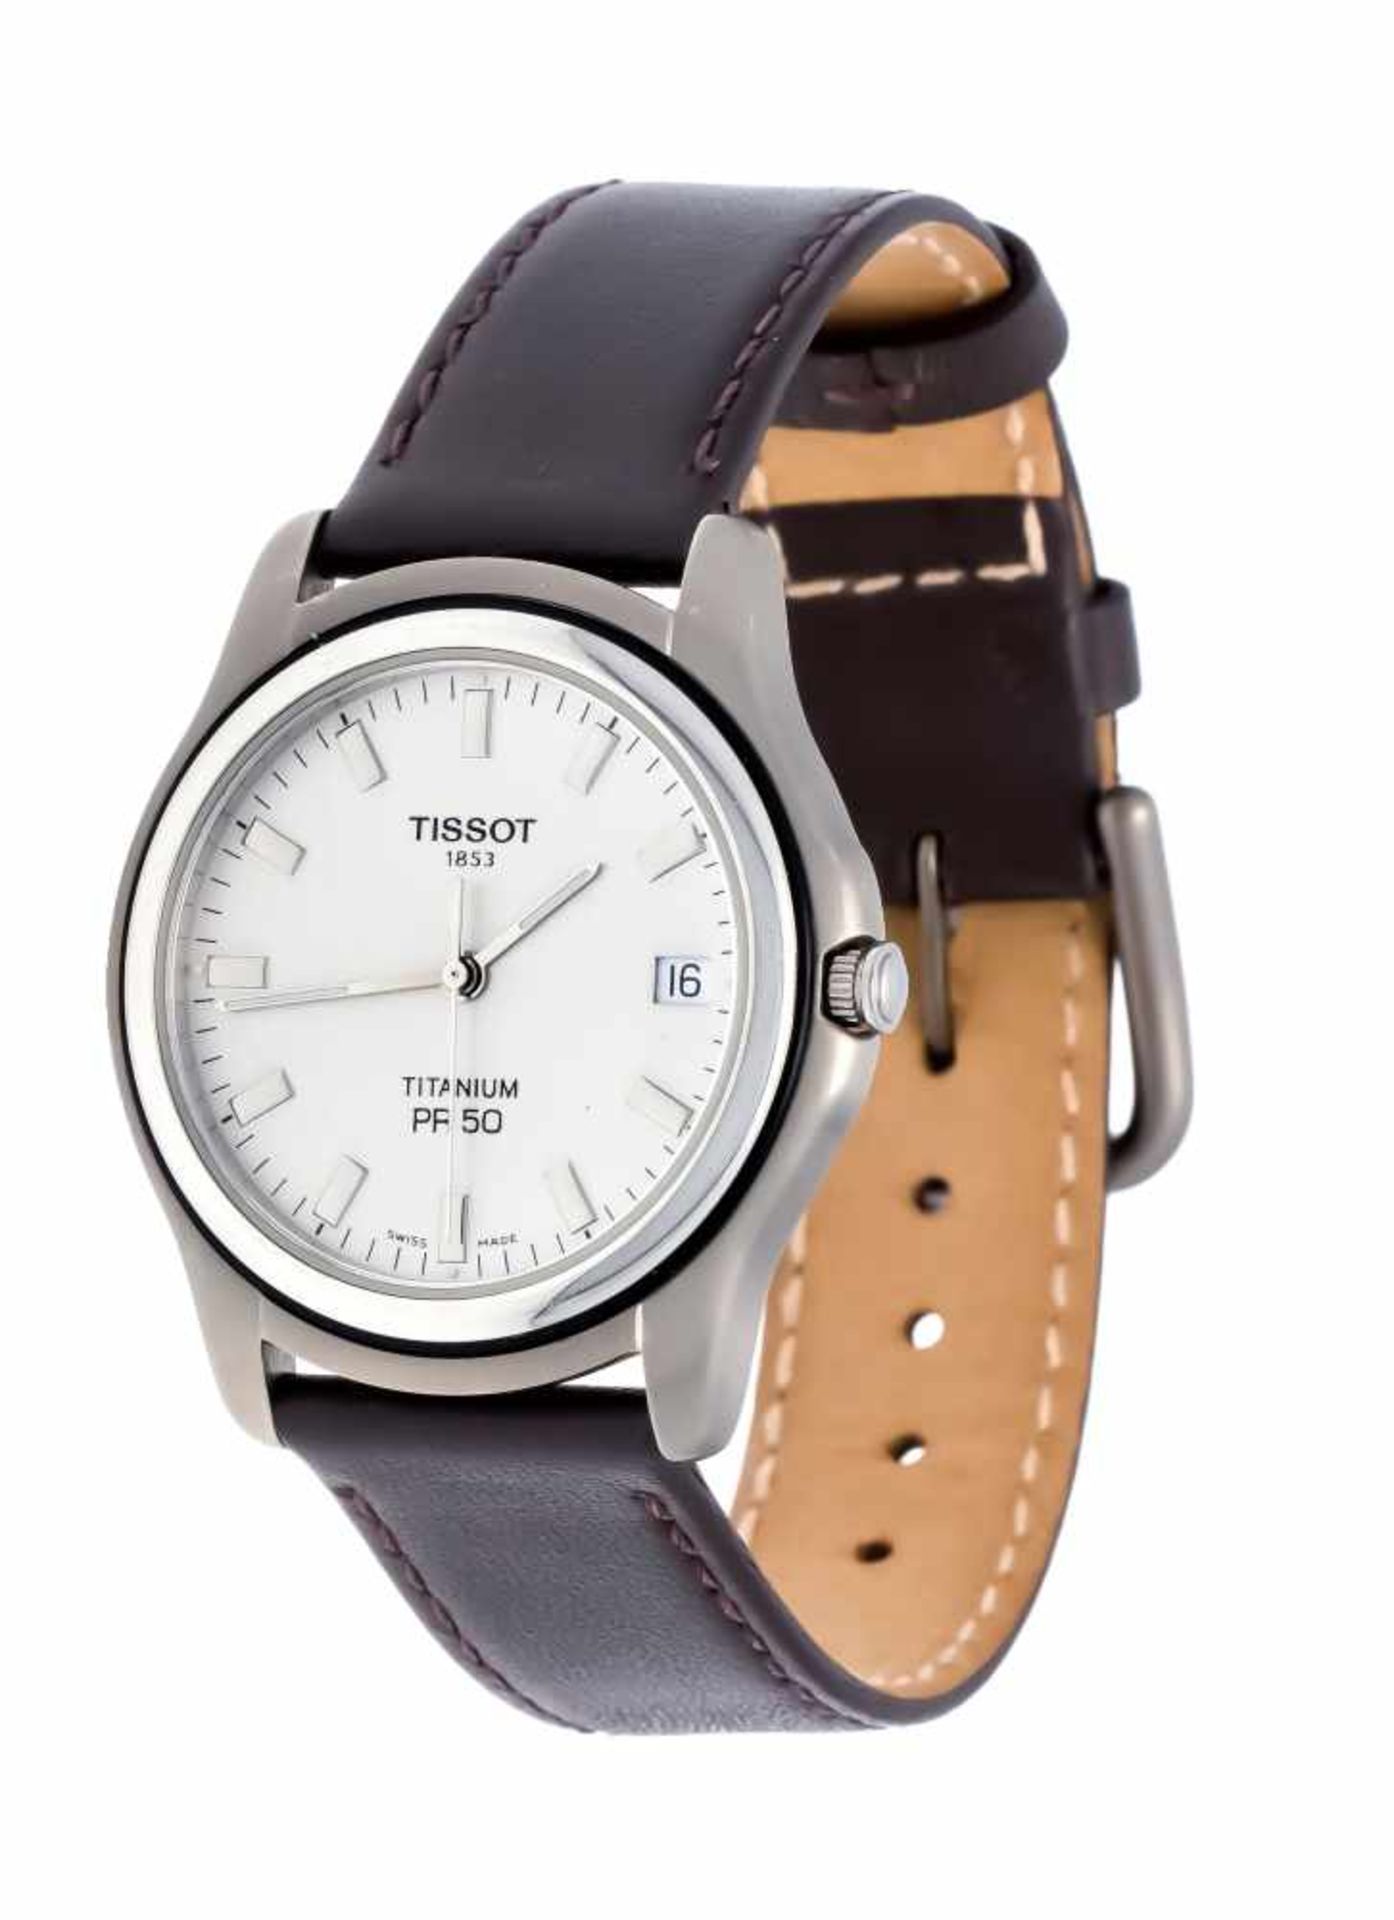 Men's quartz watch Tissot PR50 Titan Lbd. silver-colored Dial with chromed indexes,